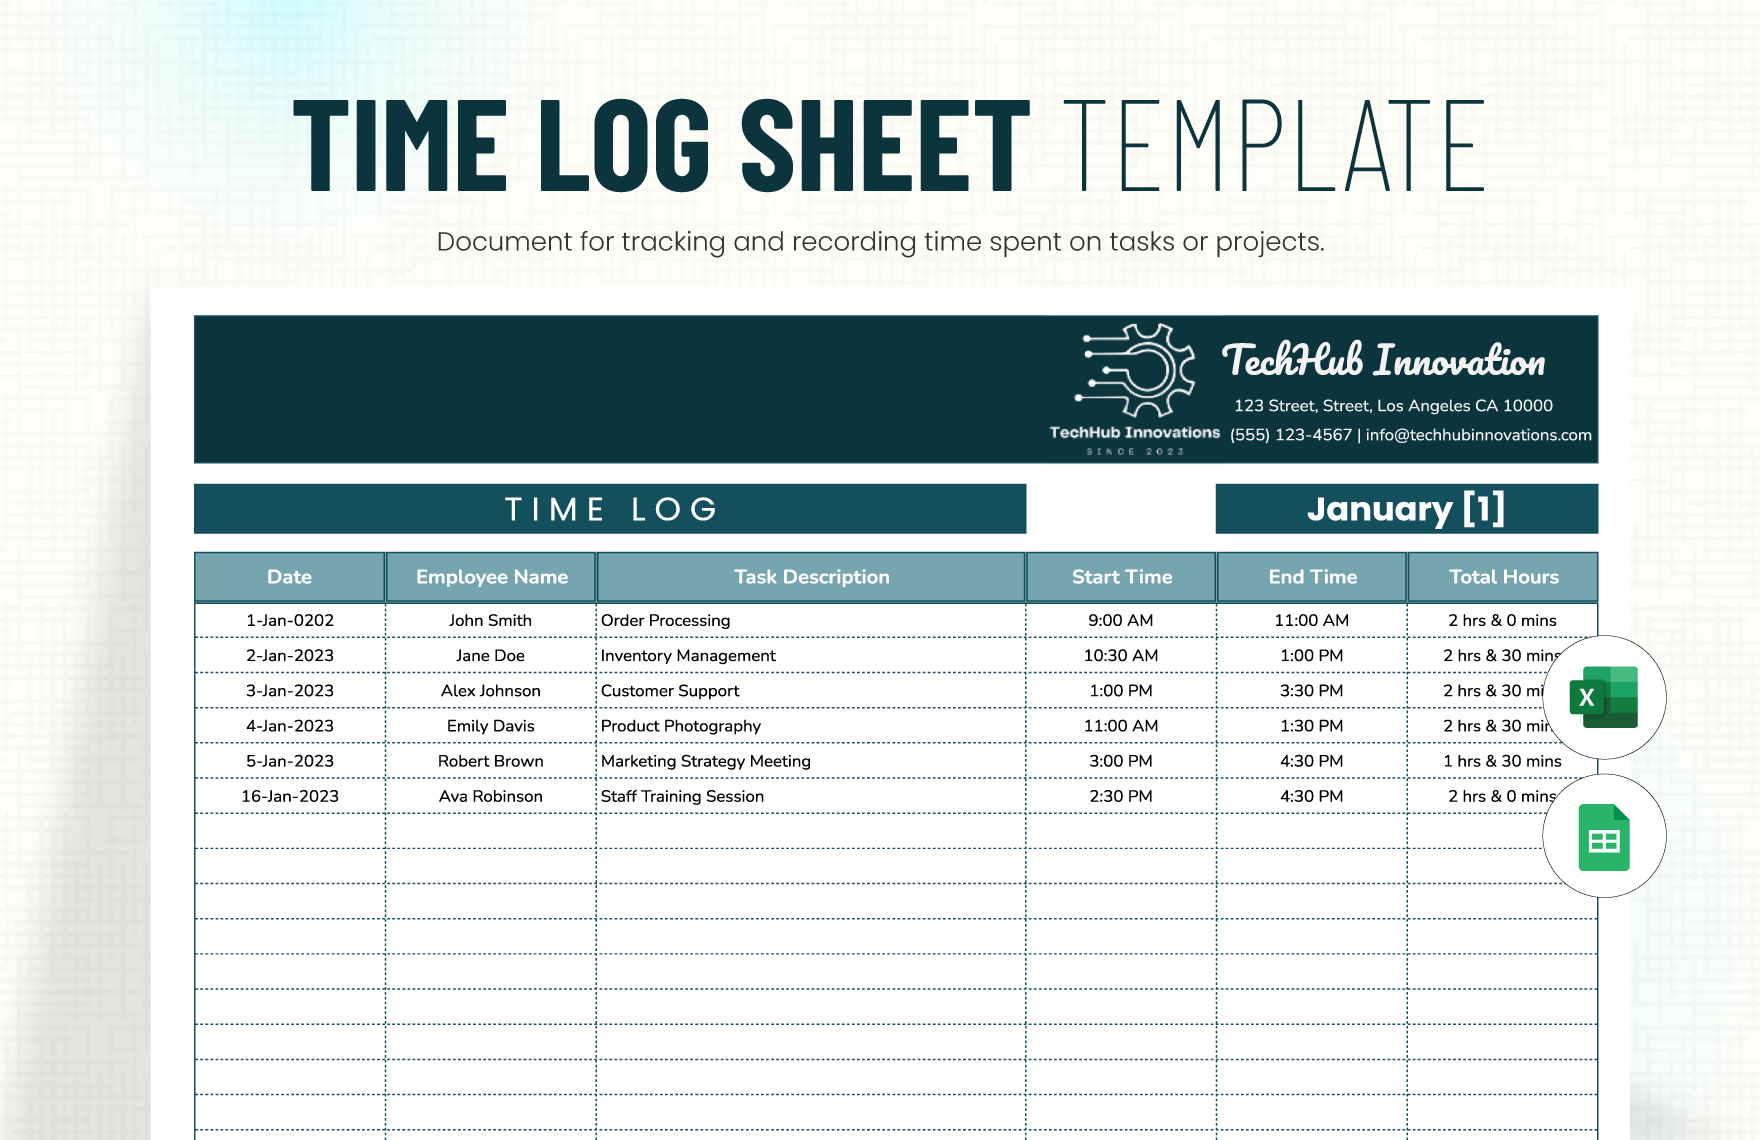 Time Log Sheet Template